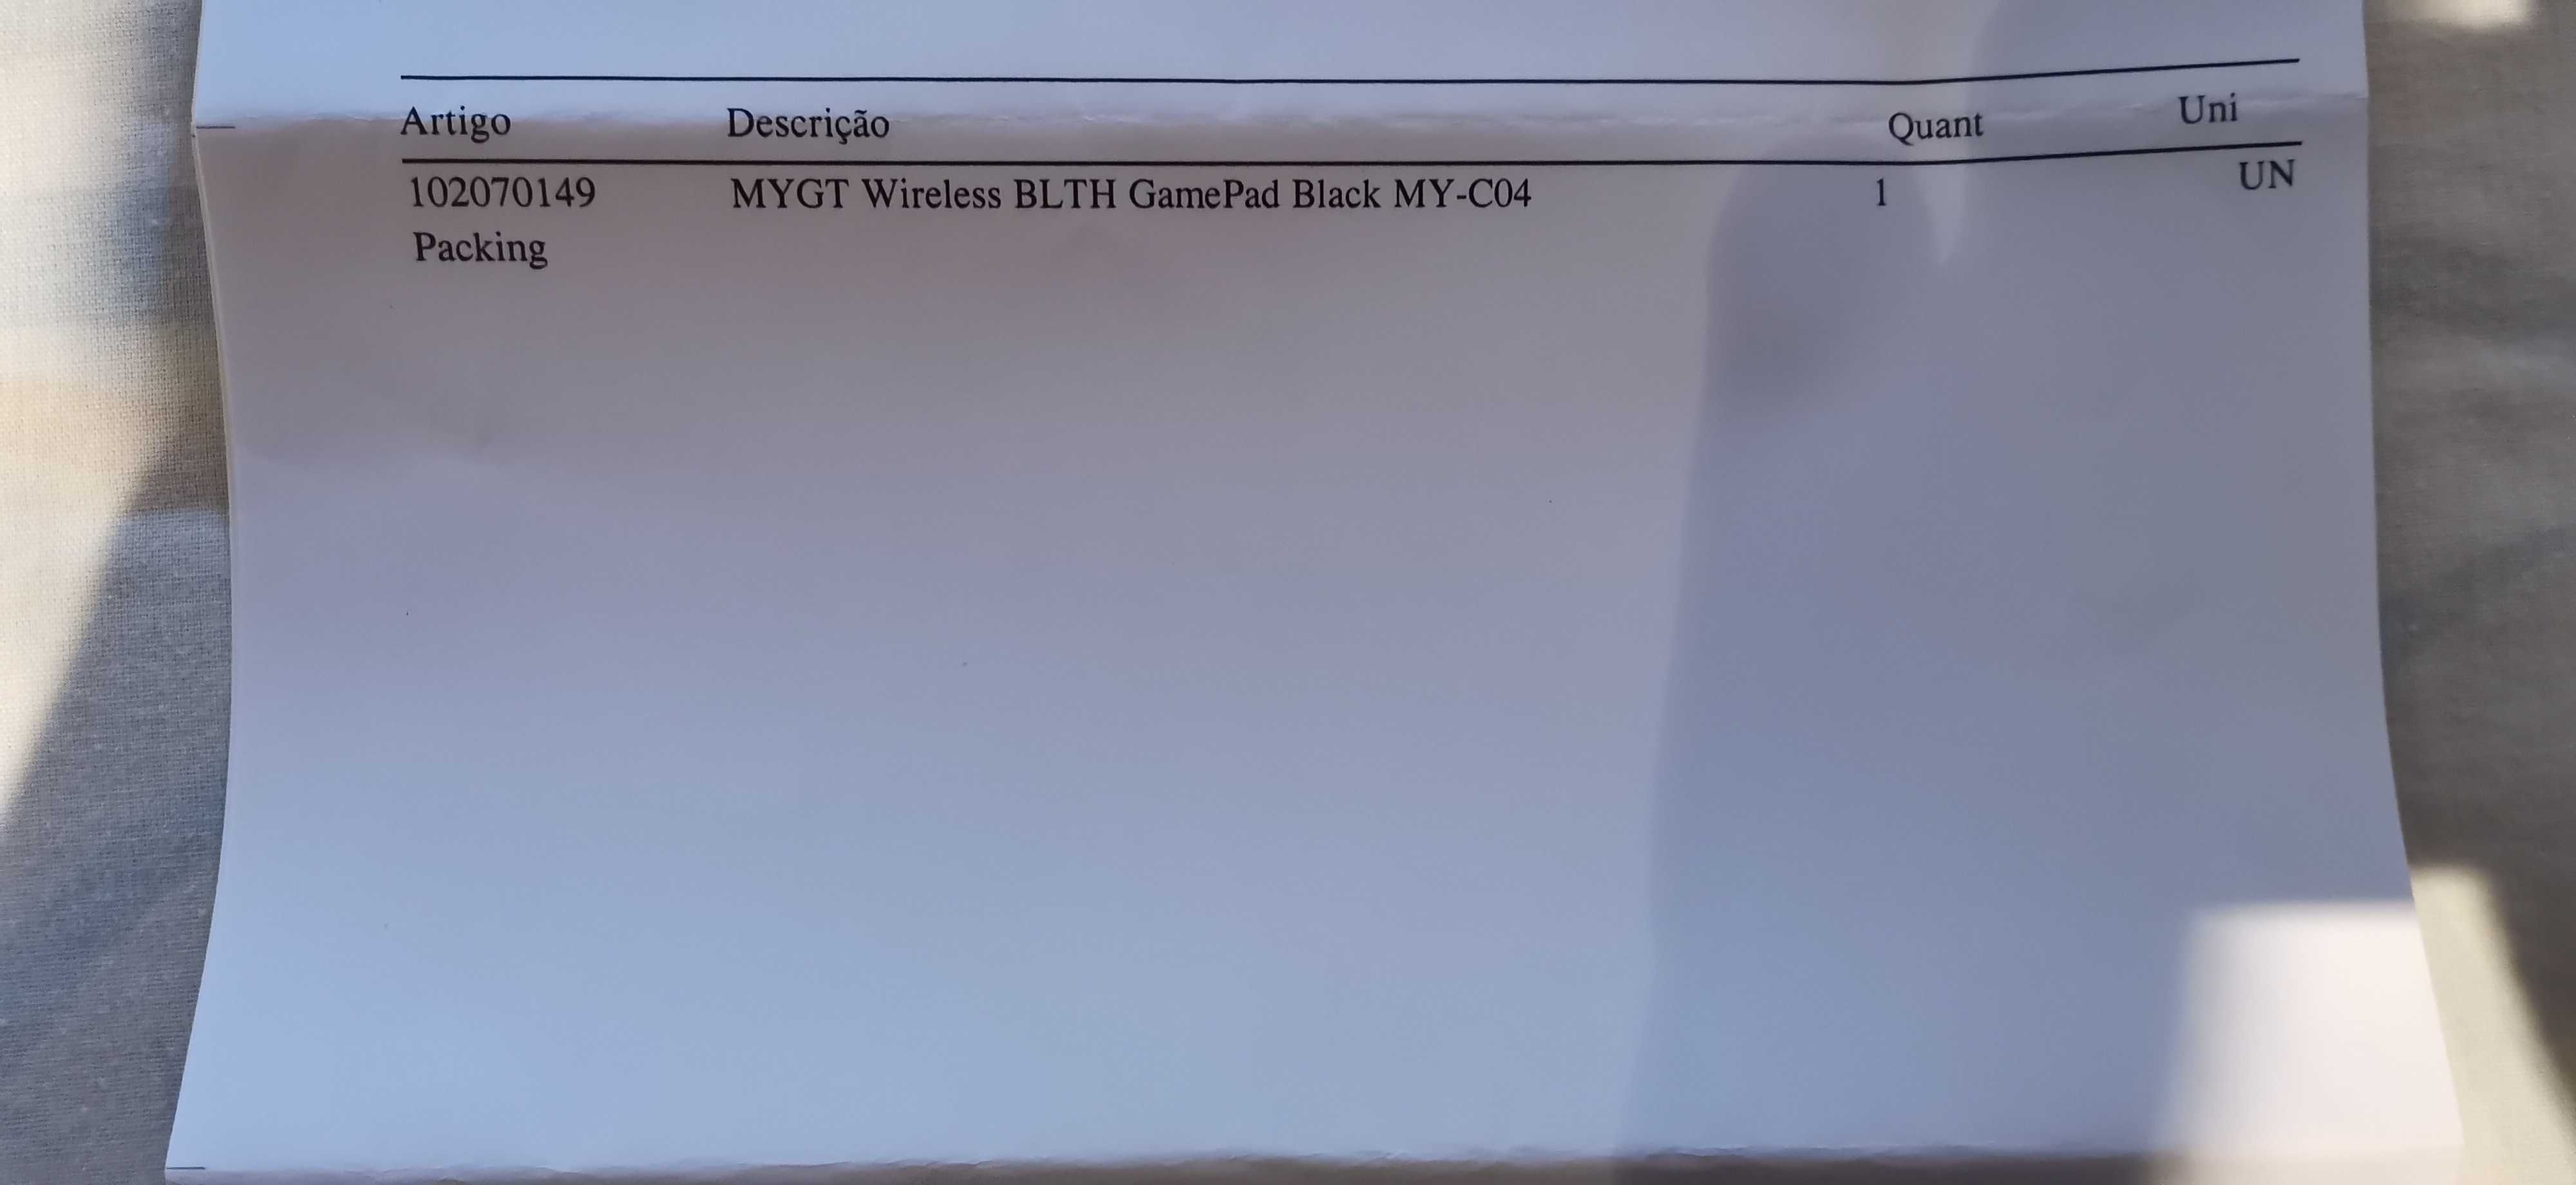 Comando mygt wireless blth gamepad Black my-c04